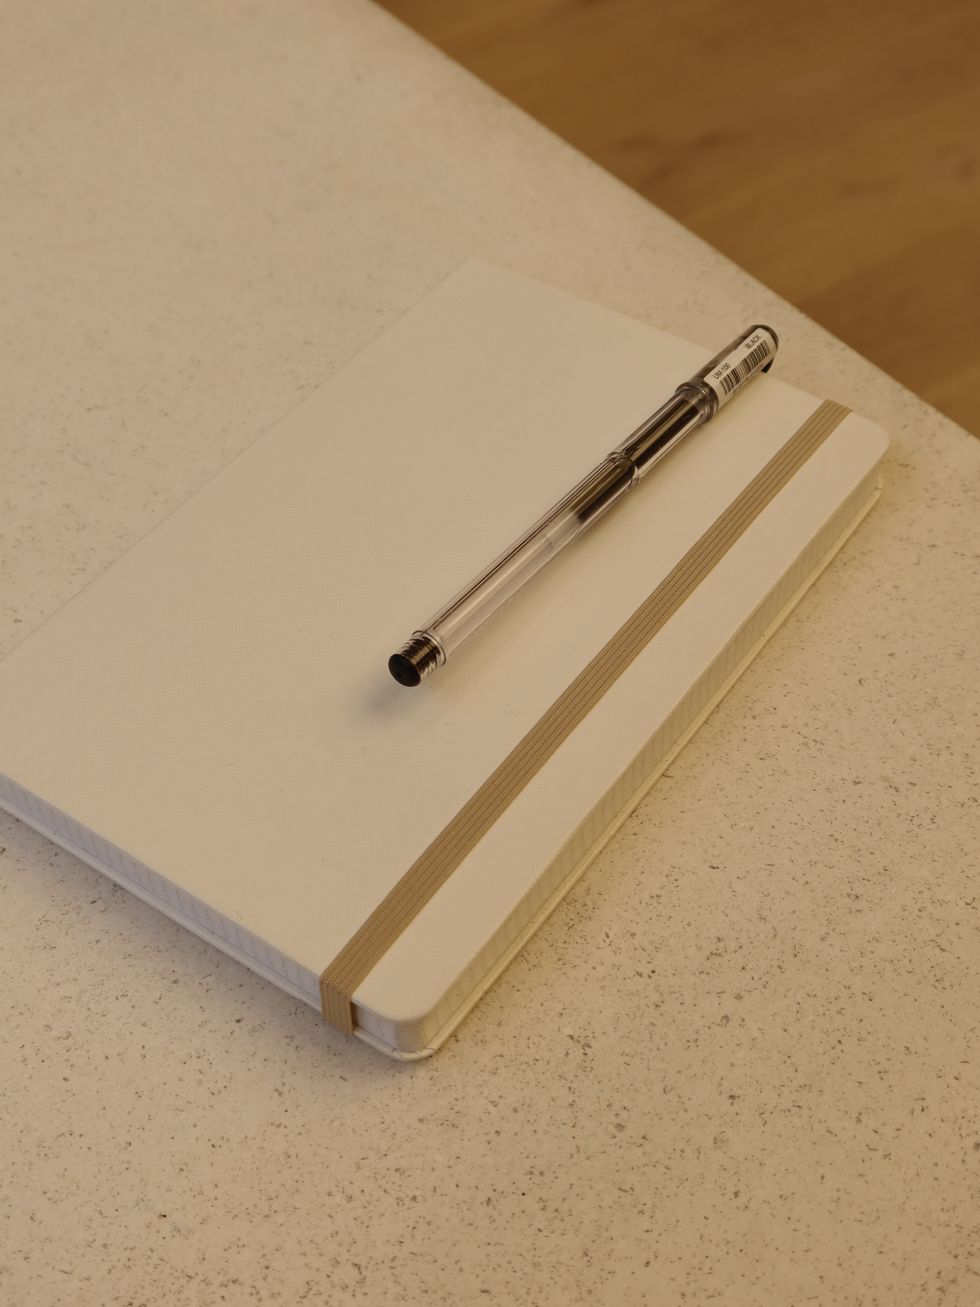 a pen on a notebook